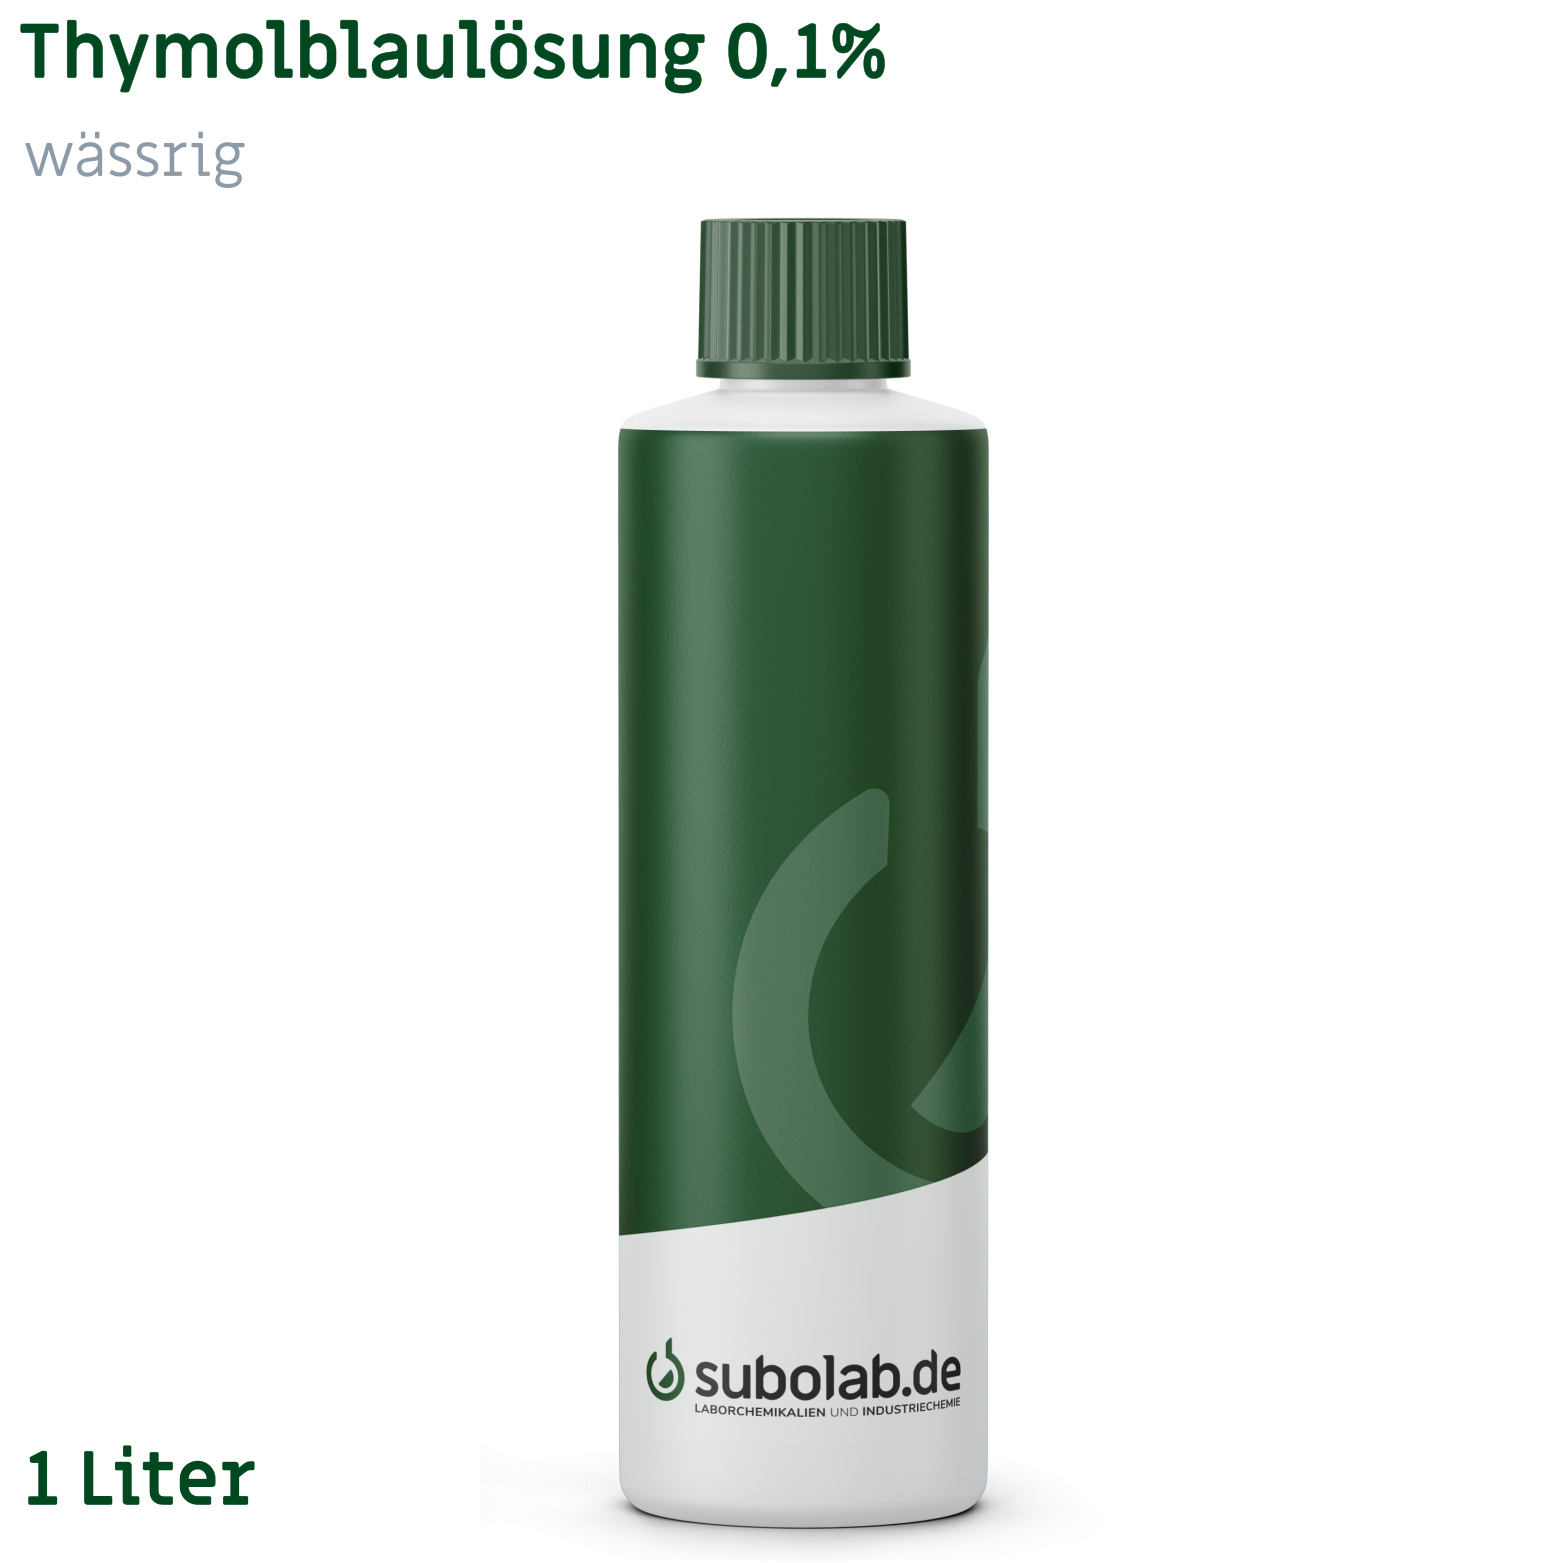 Bild von Thymolblaulösung 0,1% wässrig (1 Liter)